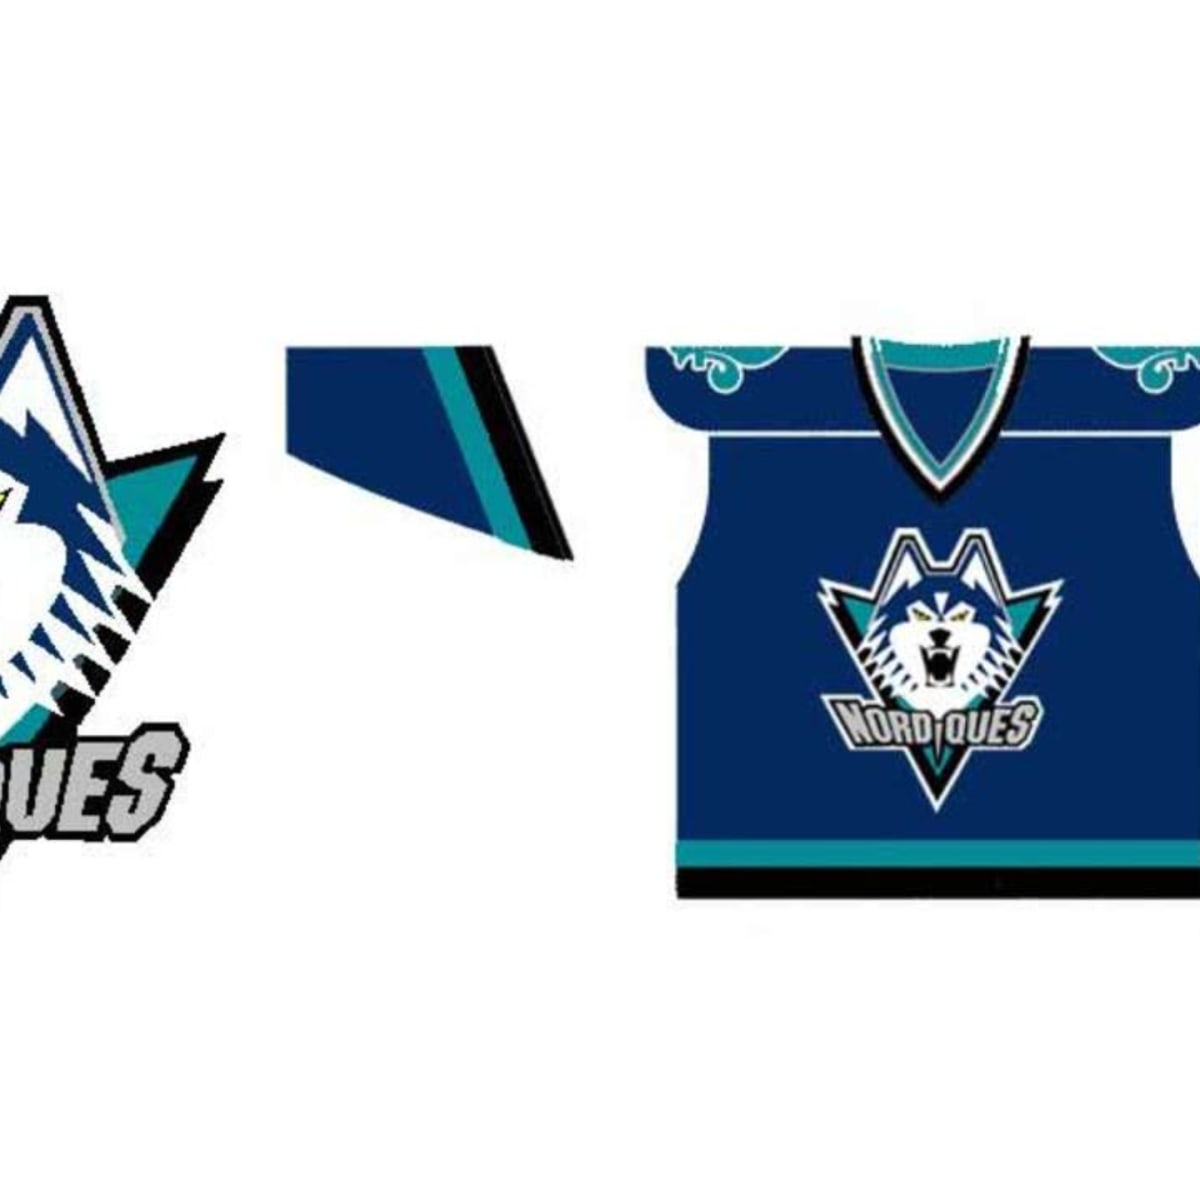 Quebec Nordiques Unused Uniform - National Hockey League (NHL